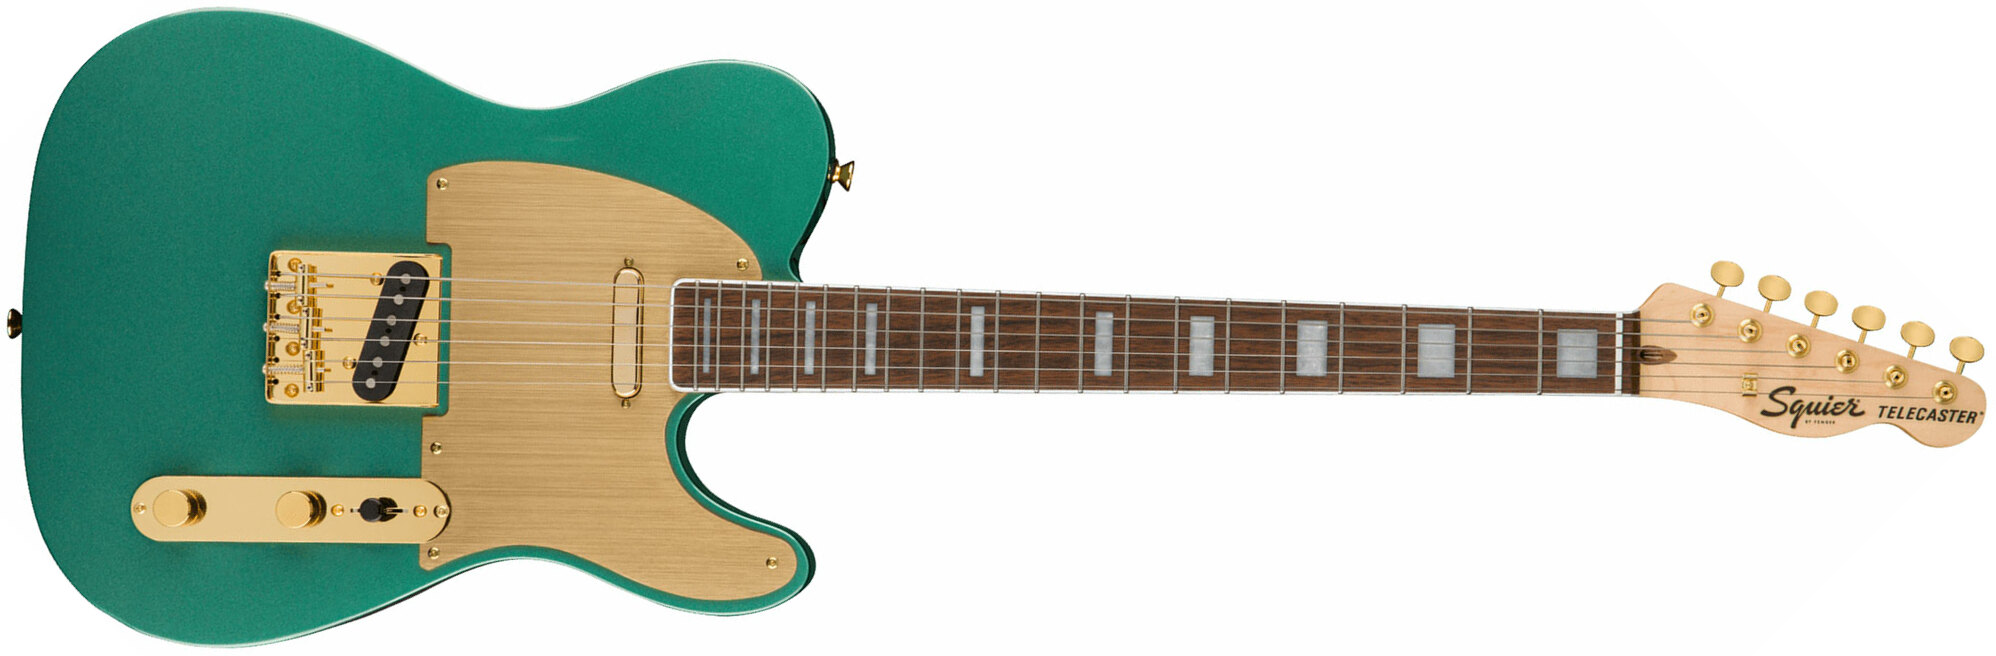 Squier Tele 40th Anniversary Gold Edition Lau - Sherwood Green Metallic - Tel shape electric guitar - Main picture